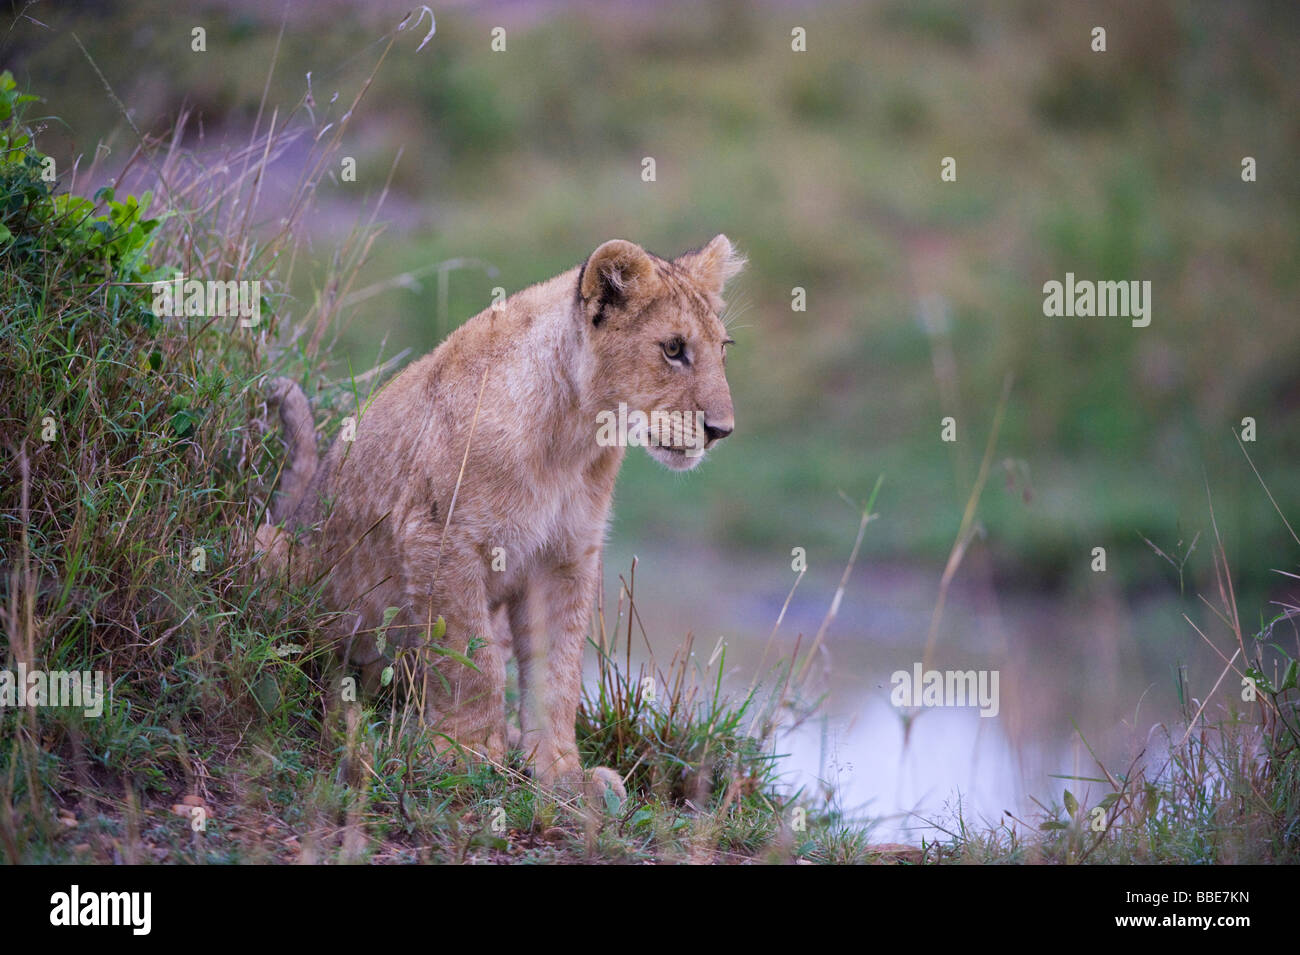 Lion (Panthera leo), Cub, Masai Mara National Reserve, Kenya, Afrique de l'Est Banque D'Images